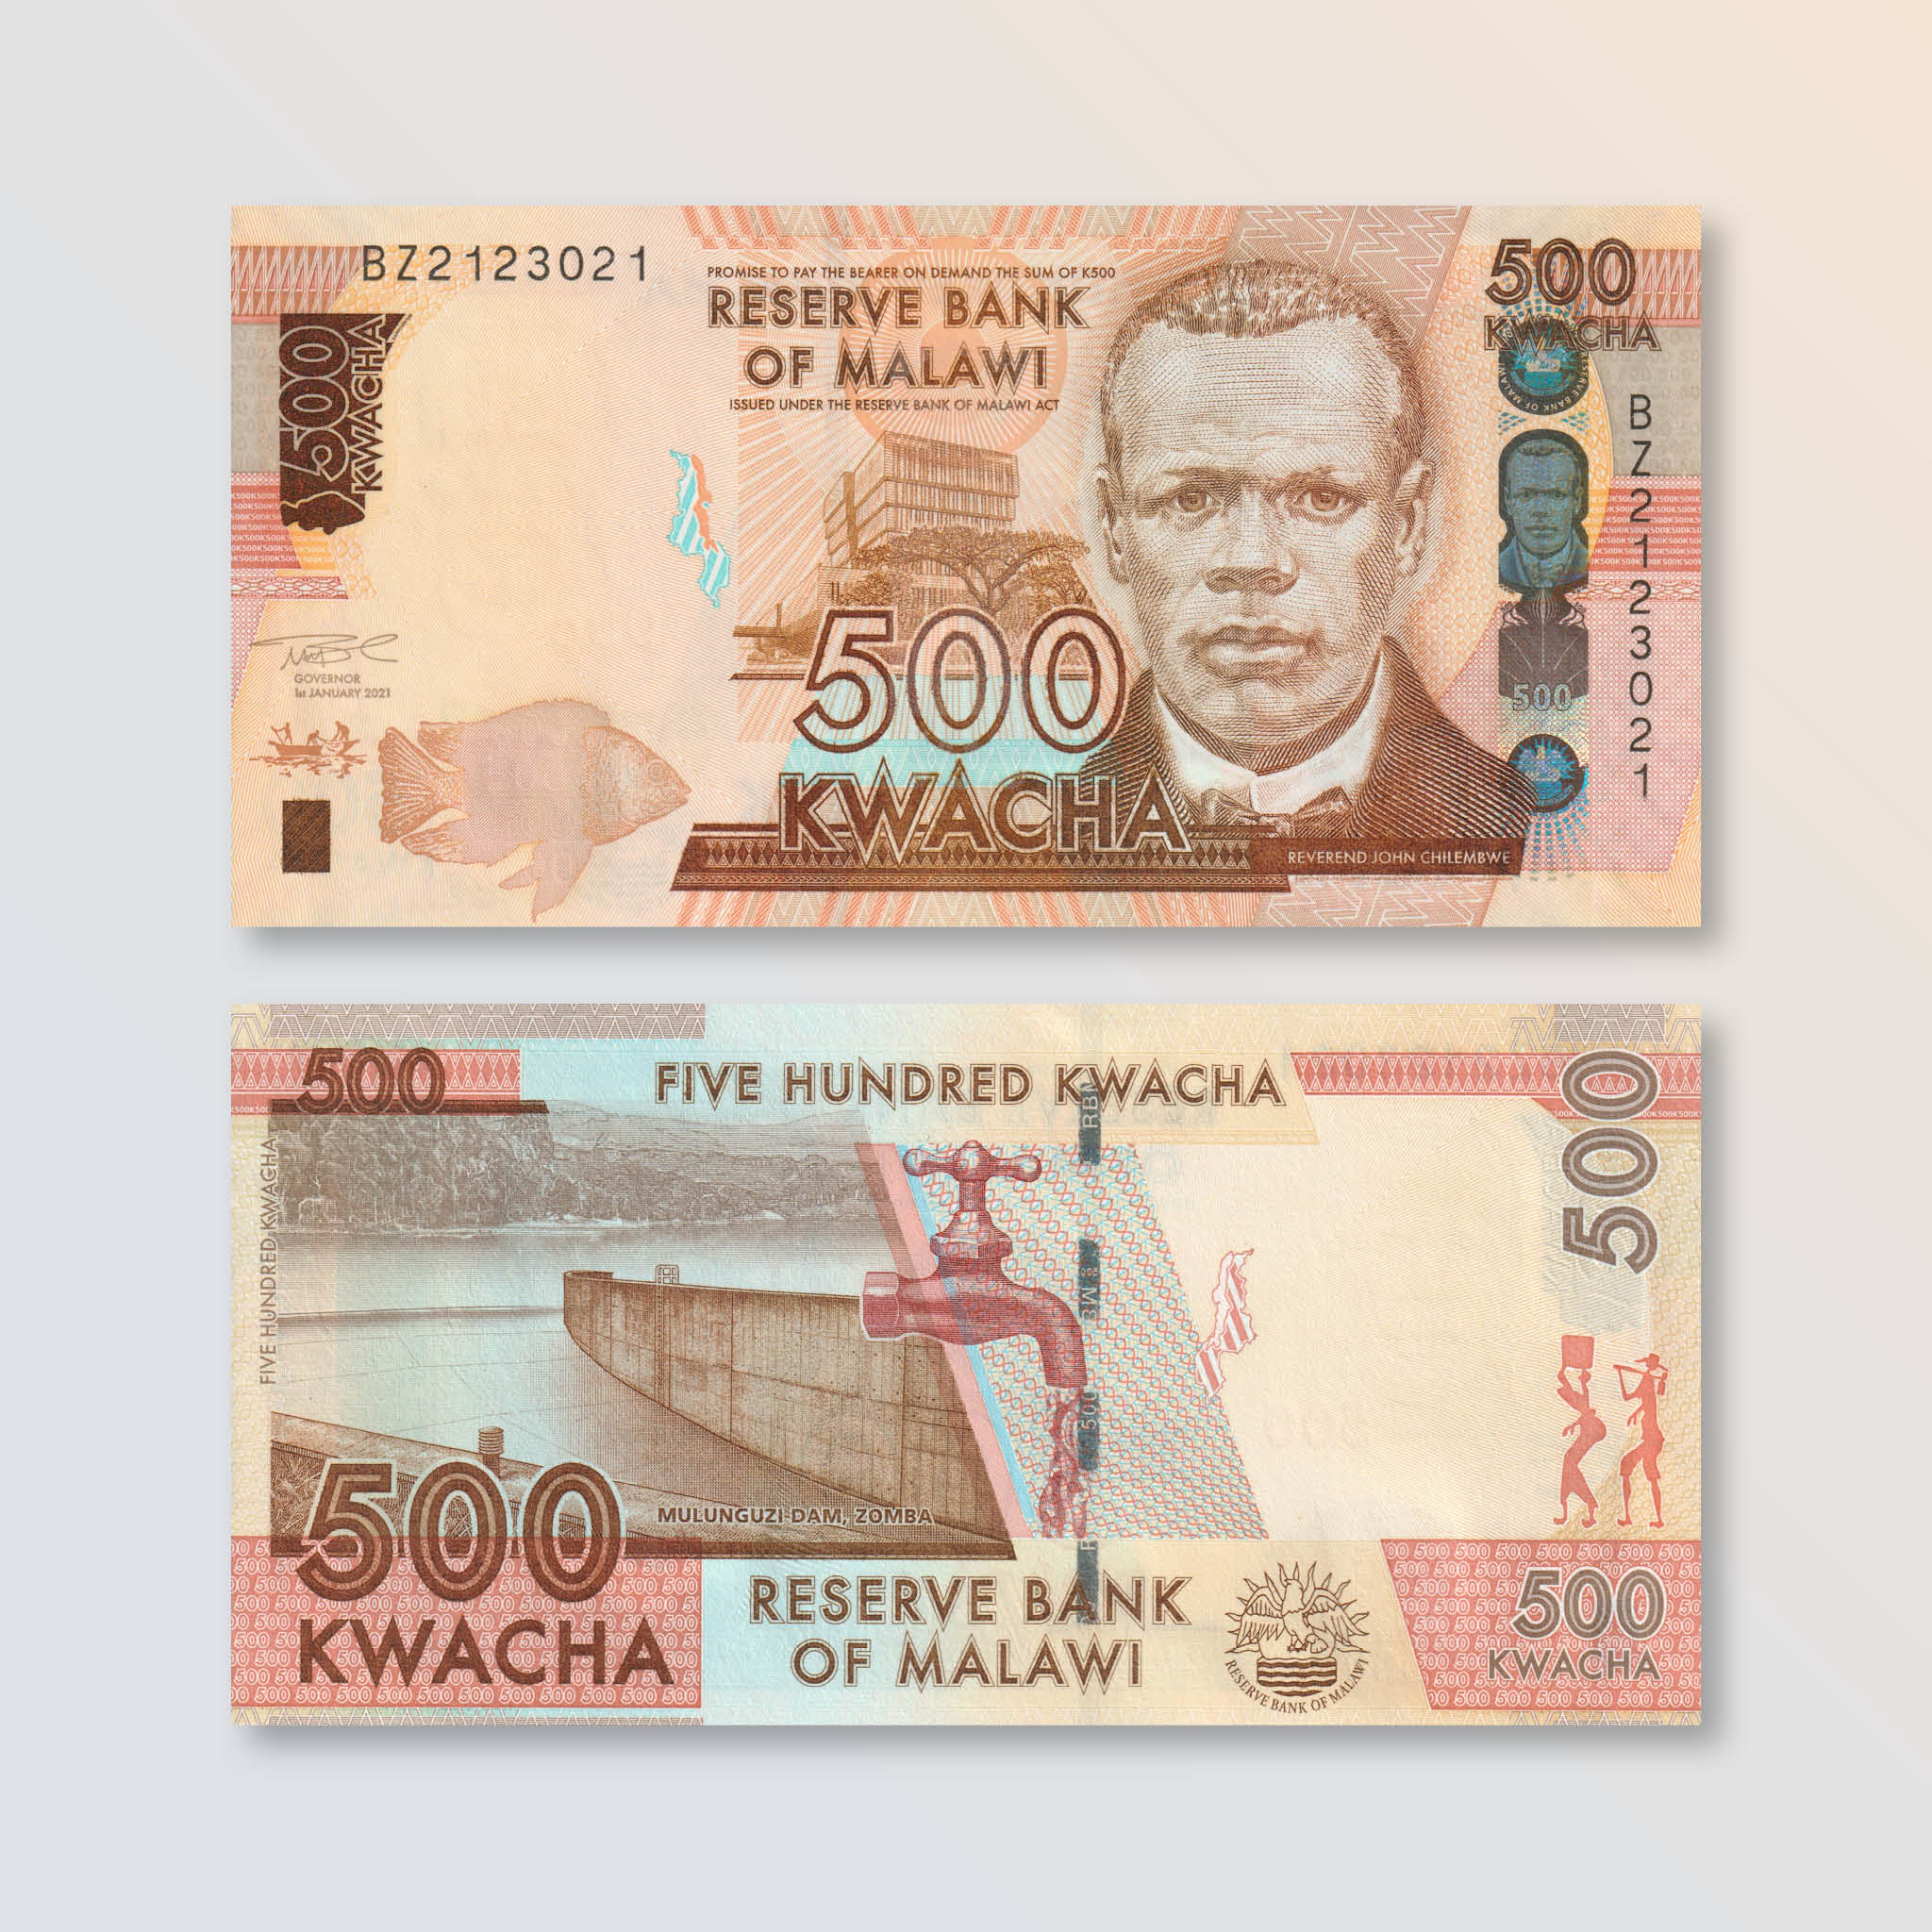 Malawi 500 Kwacha, 2021, B161c, P66, UNC - Robert's World Money - World Banknotes